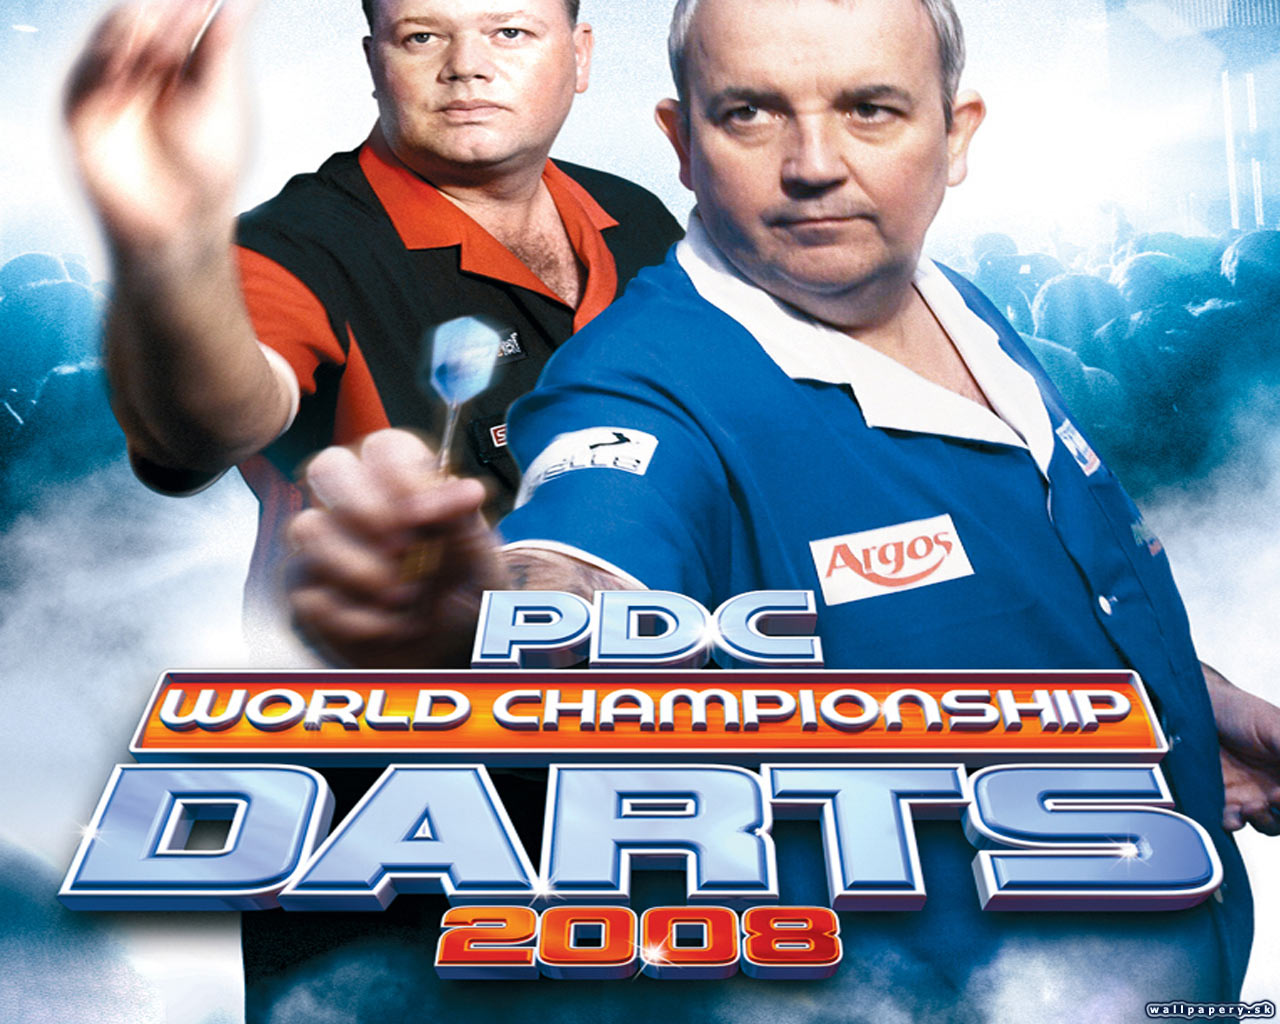 PDC World Championship Darts 2008 - wallpaper 2